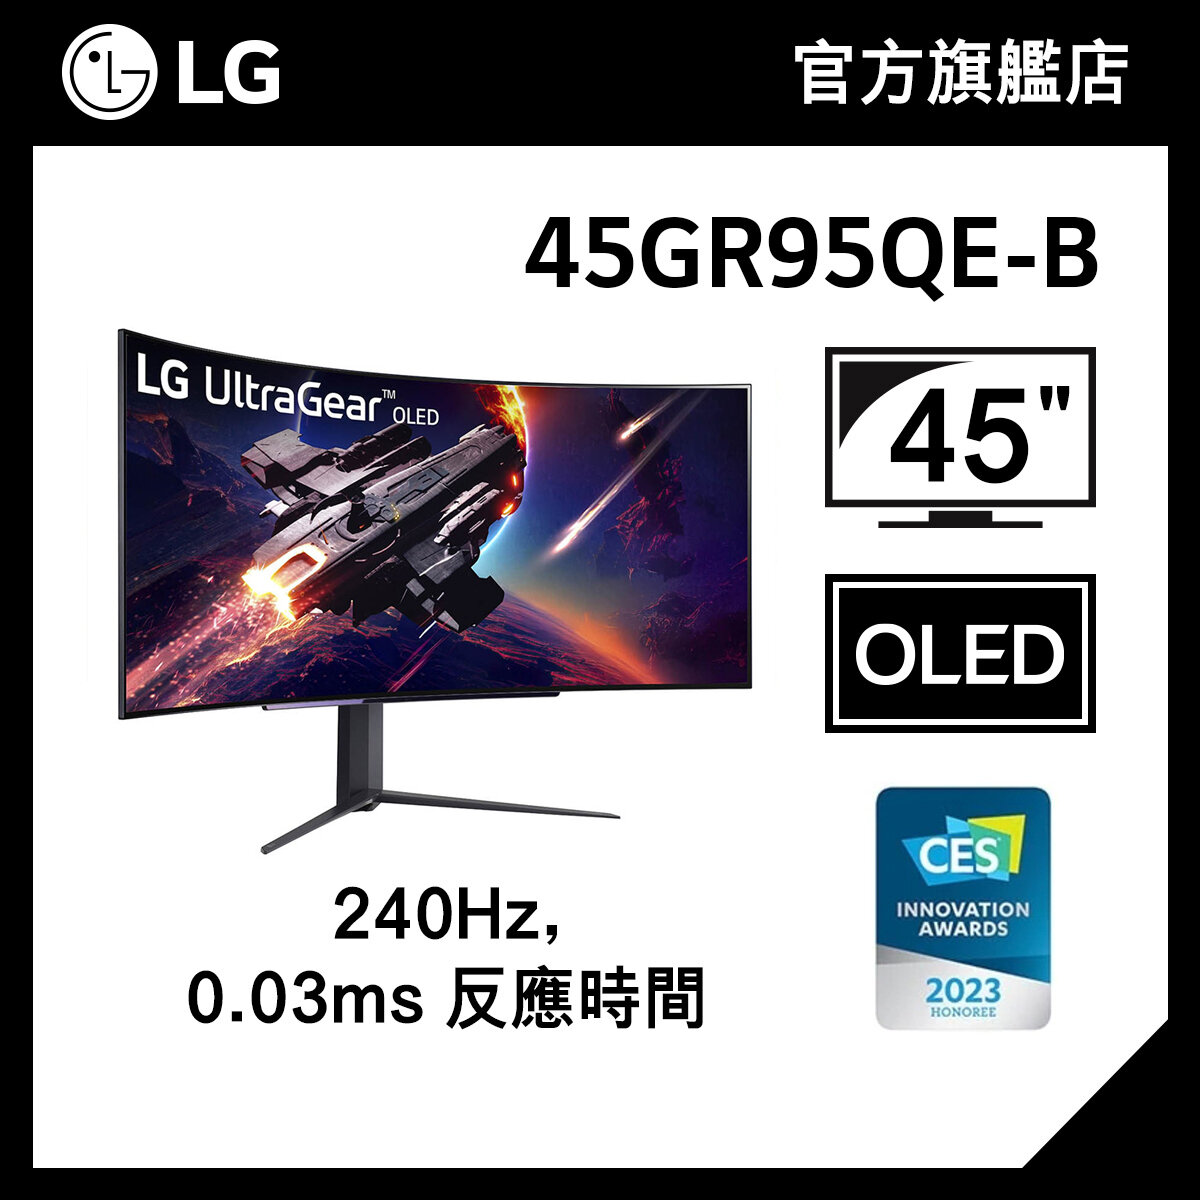 LG UltraGear™ 45" 21:9 OLED 0.03ms 弧形遊戲顯示器 45GR95QE-B, 240Hz